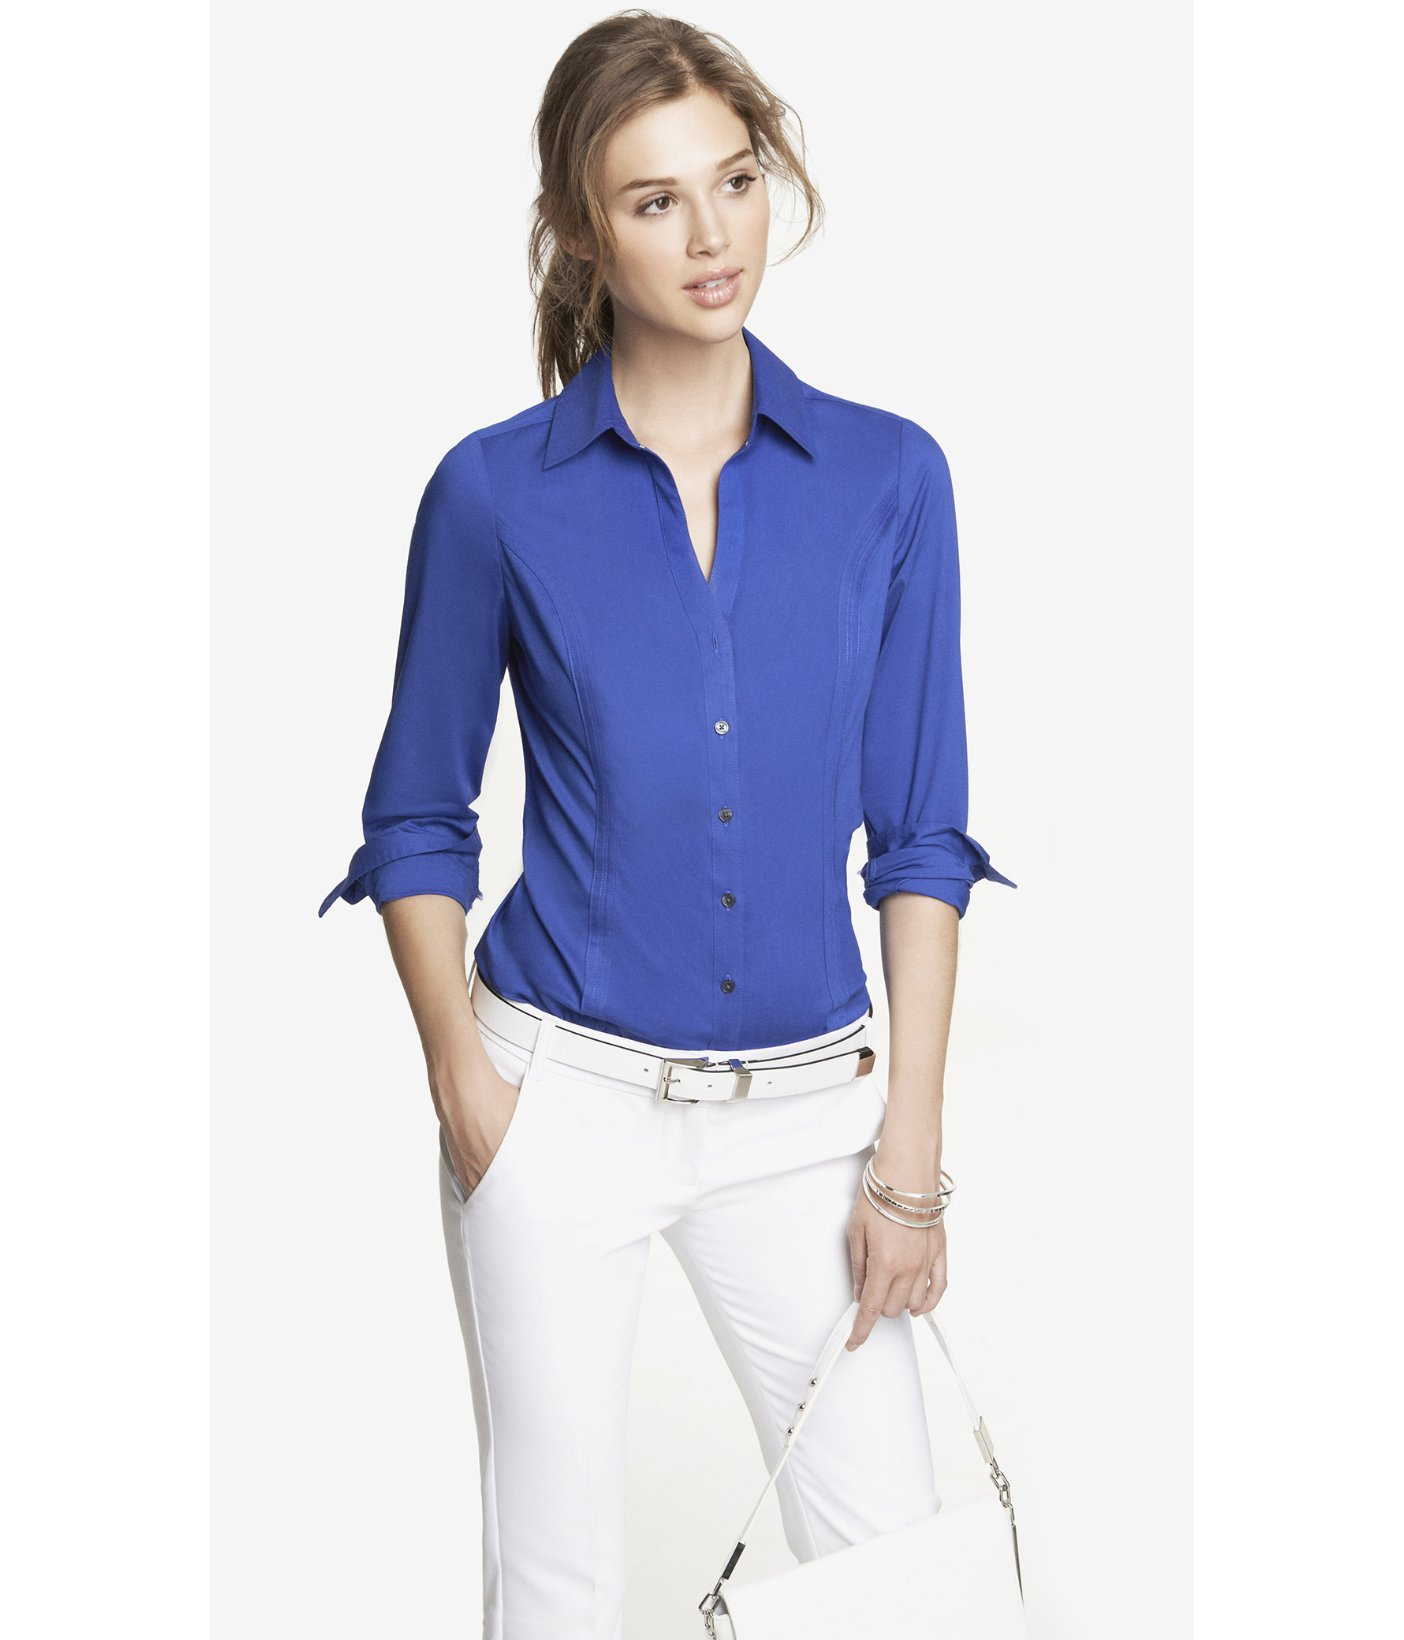 Lyst - Express The Original Long Sleeve Essential Shirt in Blue